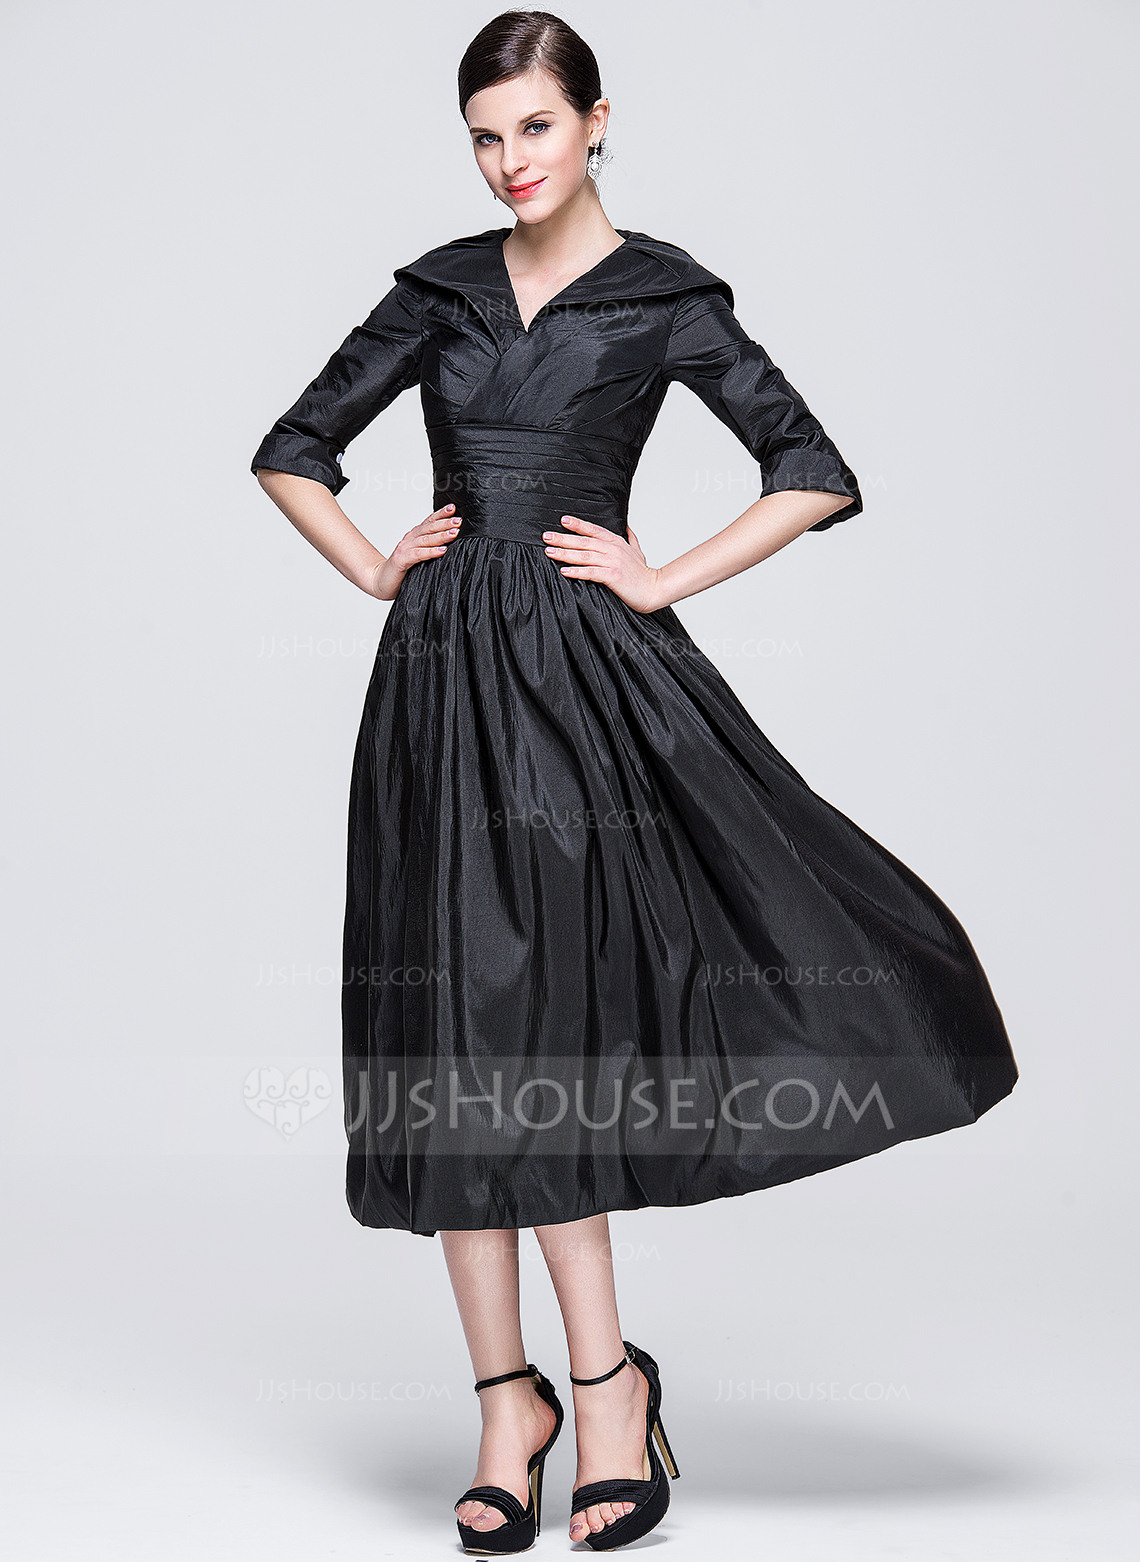 20 Cool Kleid Wadenlang DesignAbend Leicht Kleid Wadenlang Design